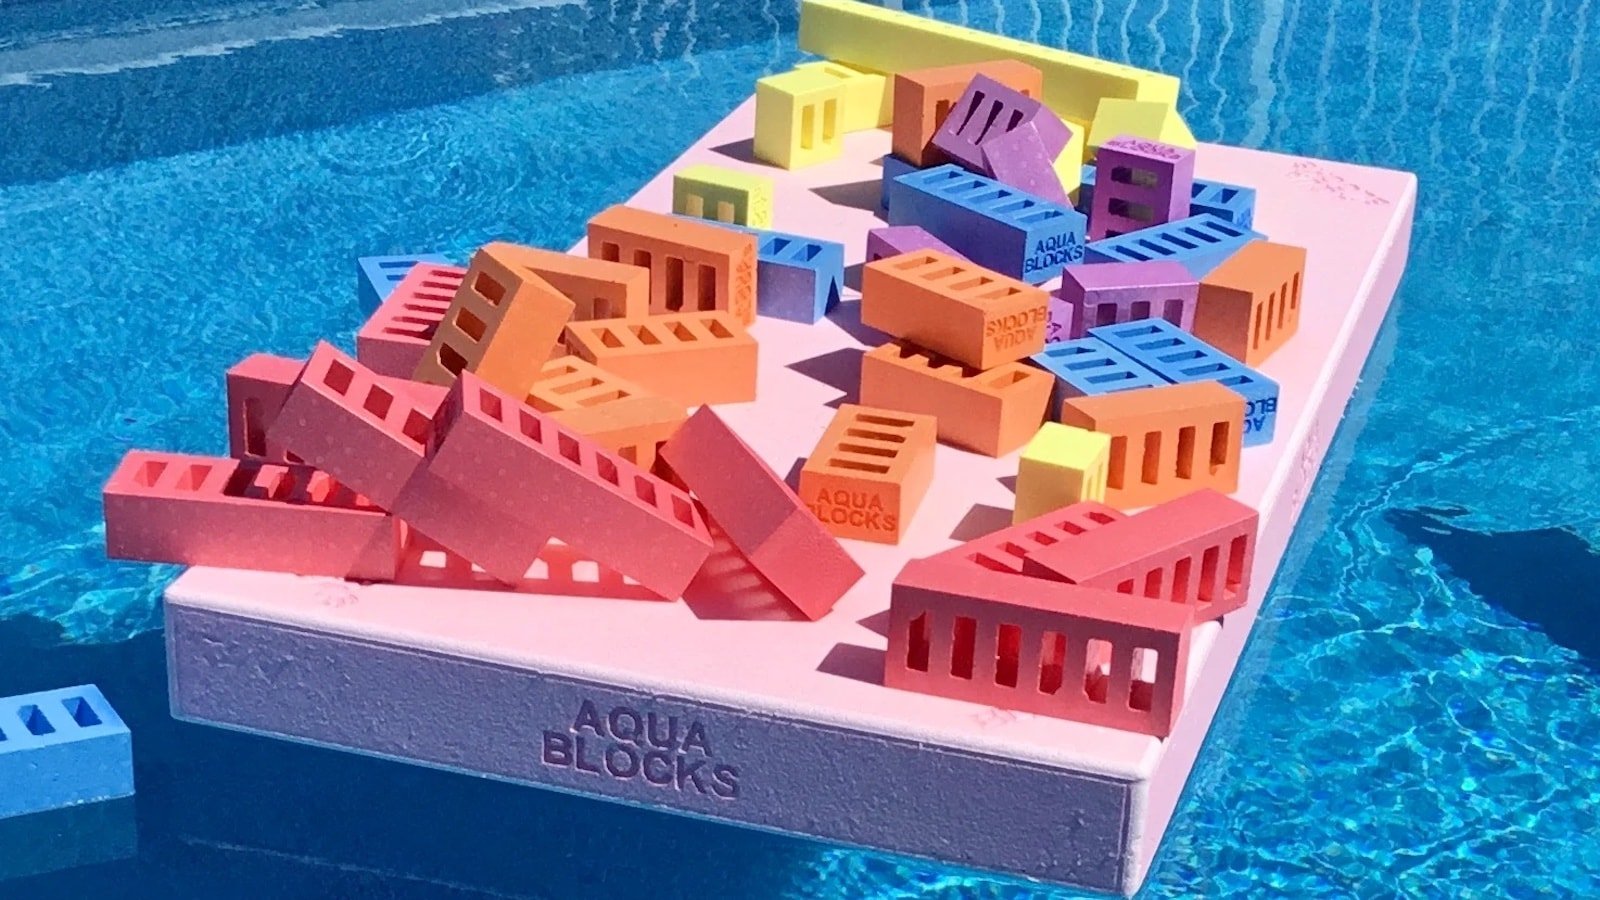 Aqua Blocks pool toy is a floating platform and block combination set